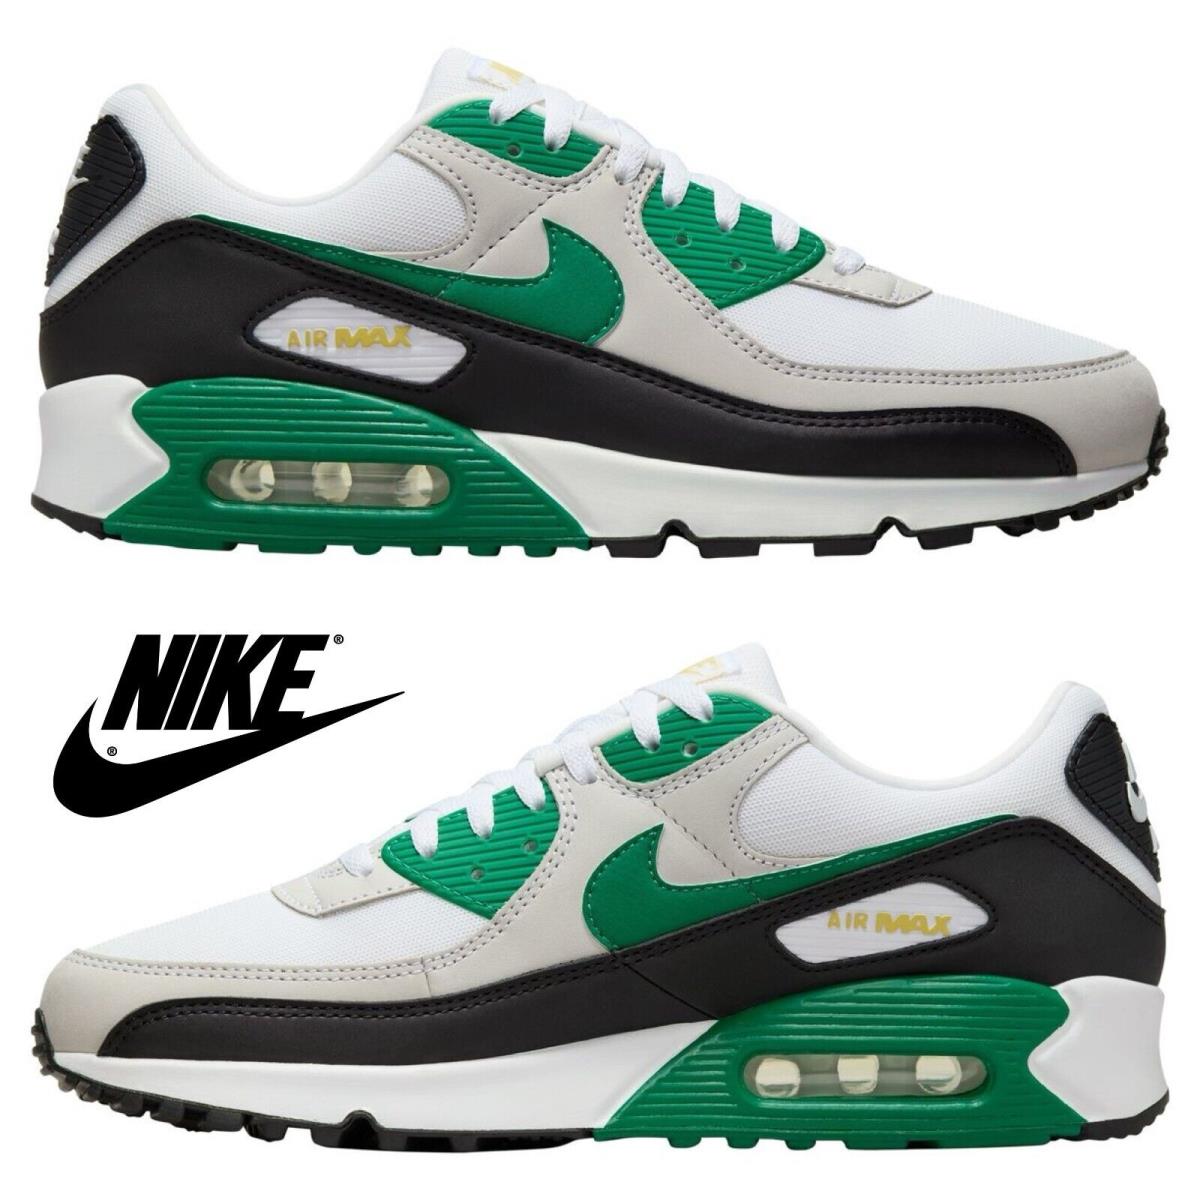 Nike Air Max 90 Men`s Sneakers Comfort Casual Sport Shoes Gum Run Green Black - Green, Manufacturer: White/Malachite/Saturn Gold